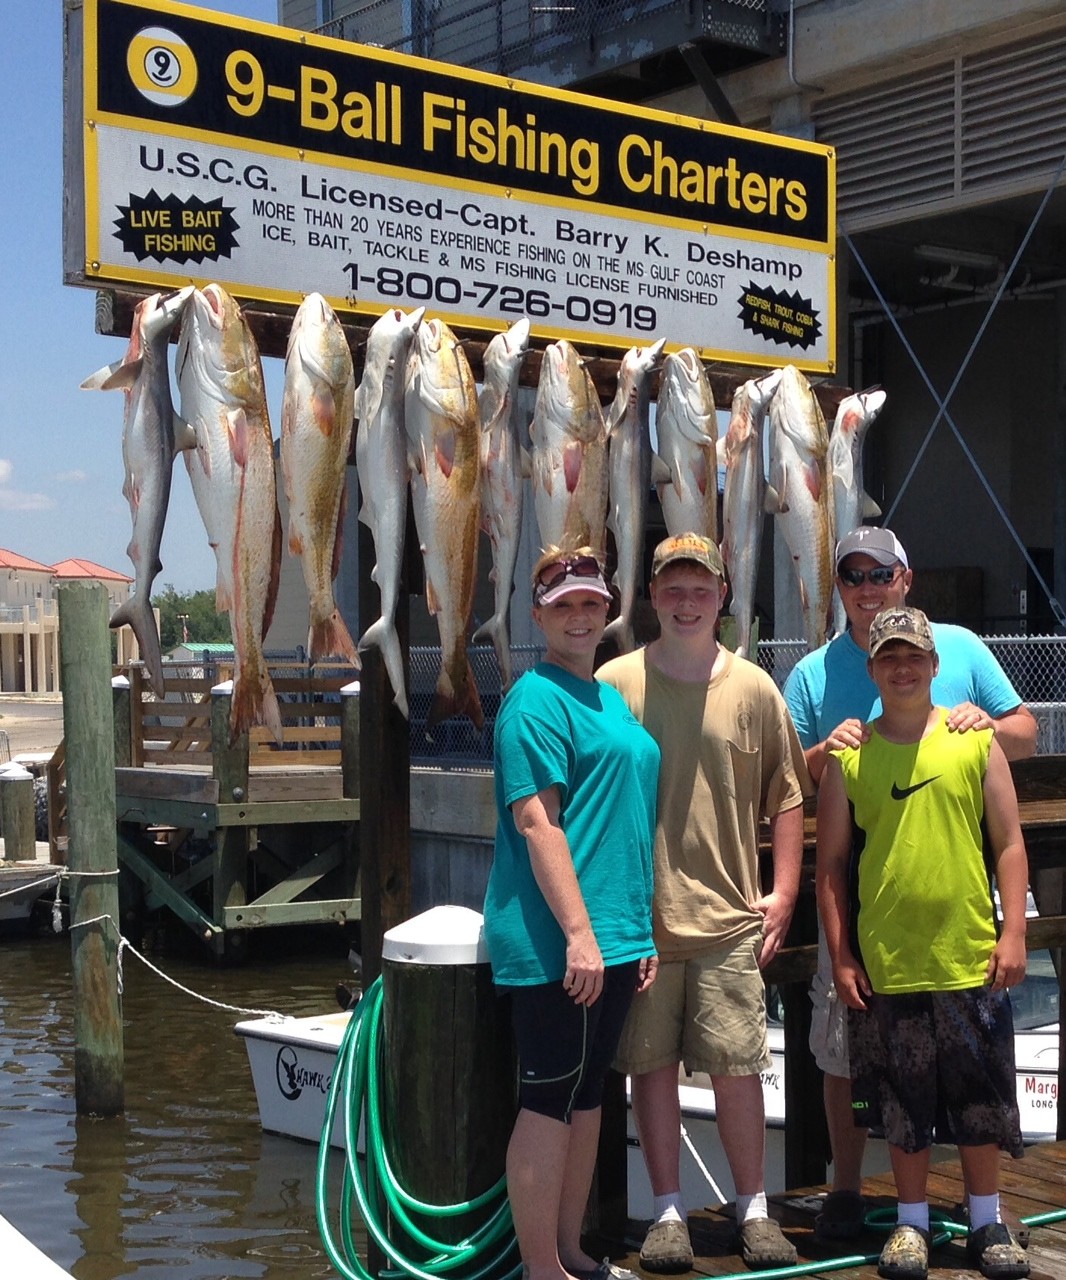 9 Ball Fishing Charters: Mississippi Fishing Charter